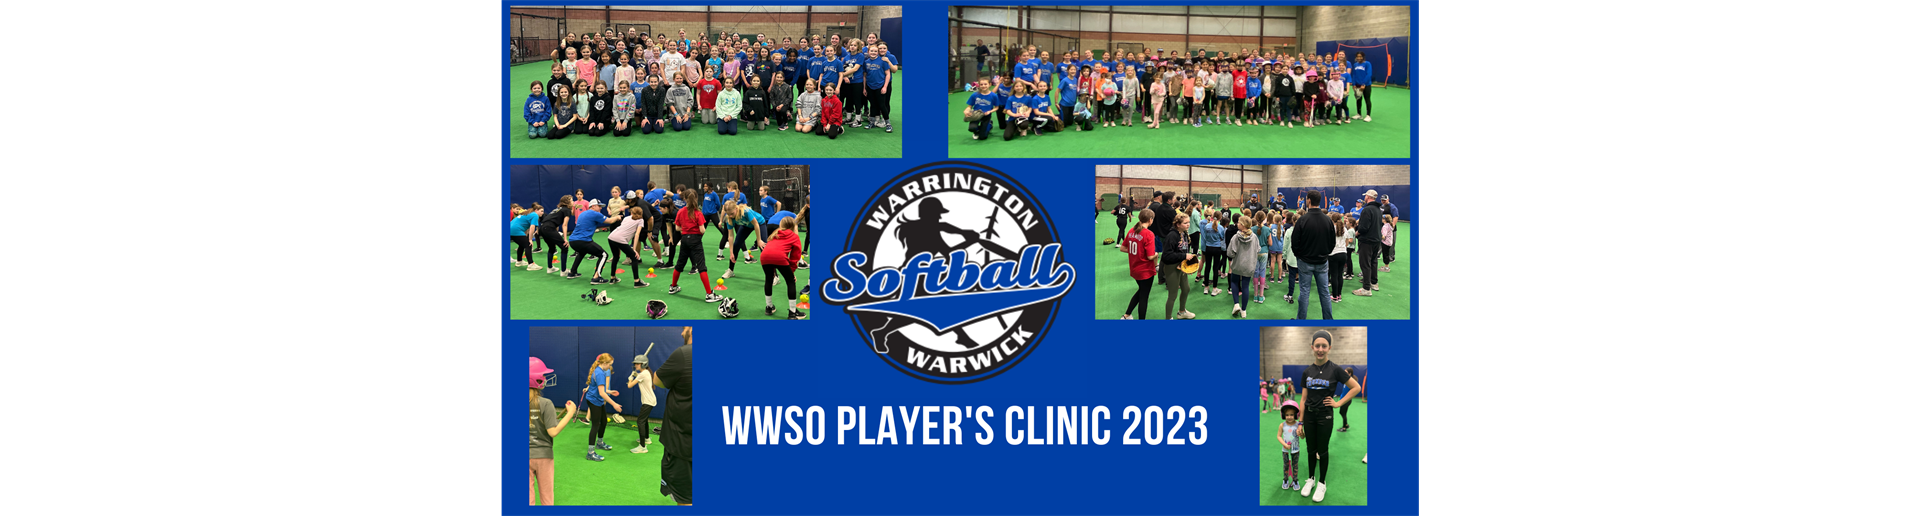 WWSO Player's Clinic 2023